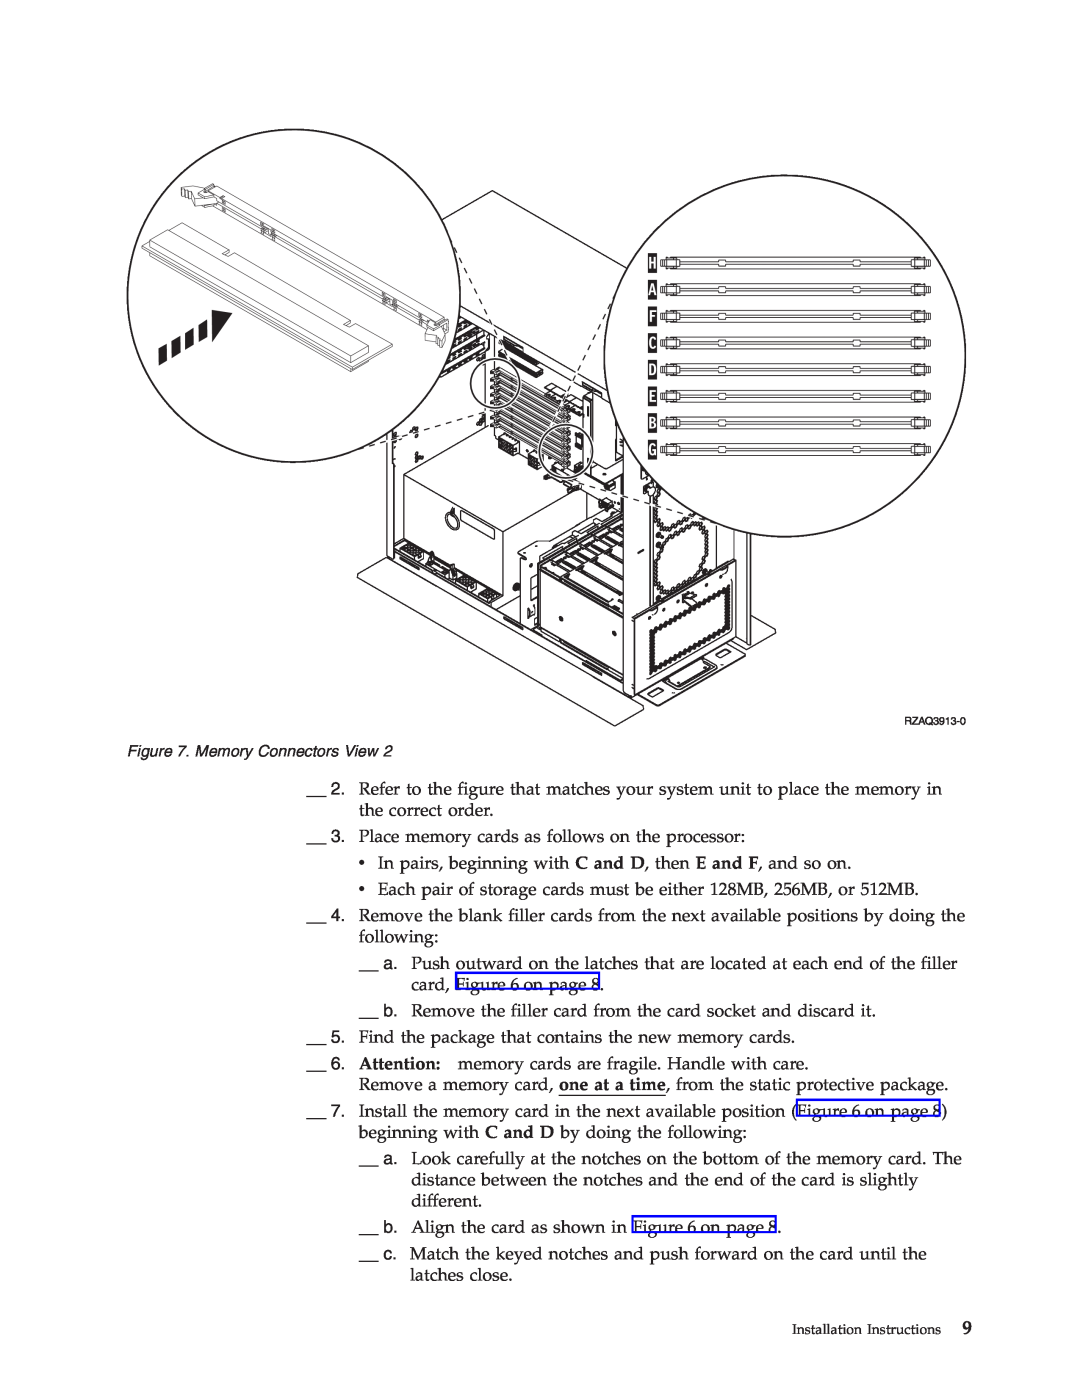 IBM SENG-3002-01 manual Memory Connectors View 